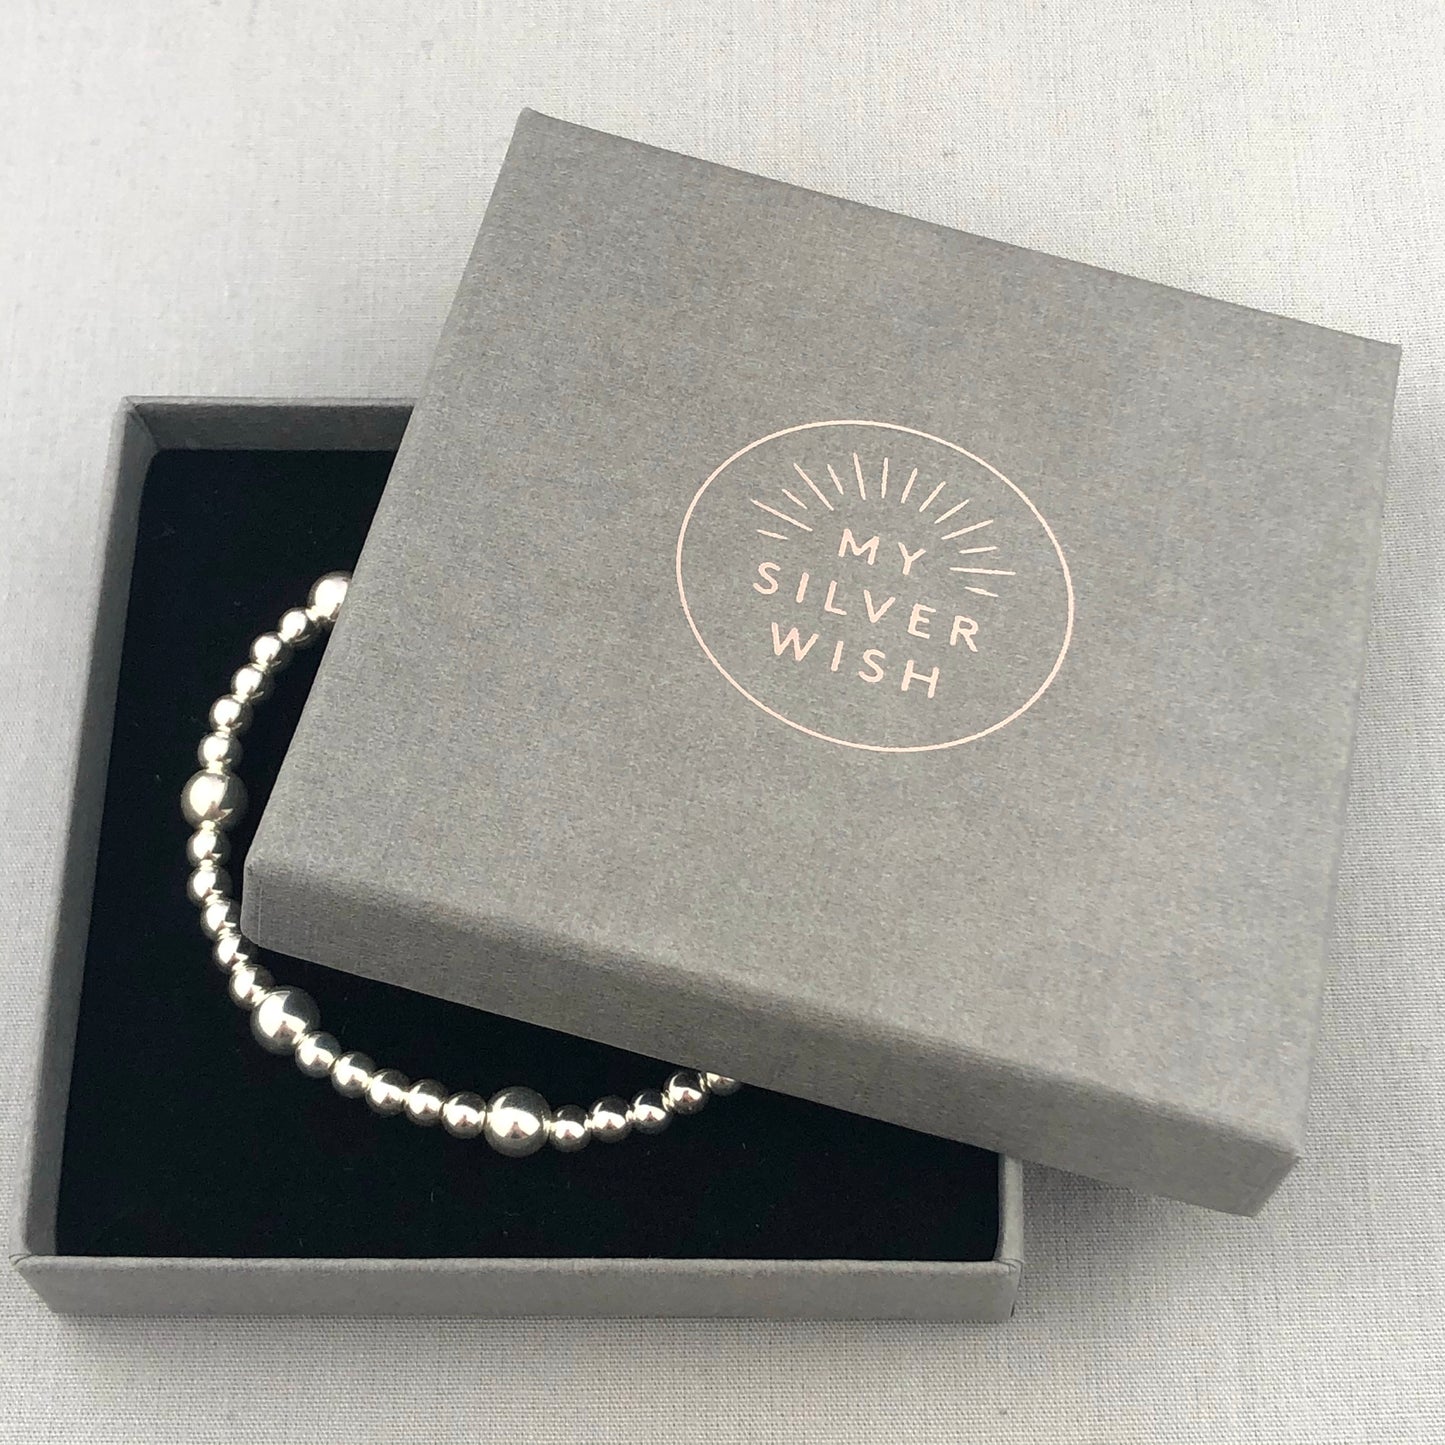 My Silver Wish Gift Box with a charm bracelet inside